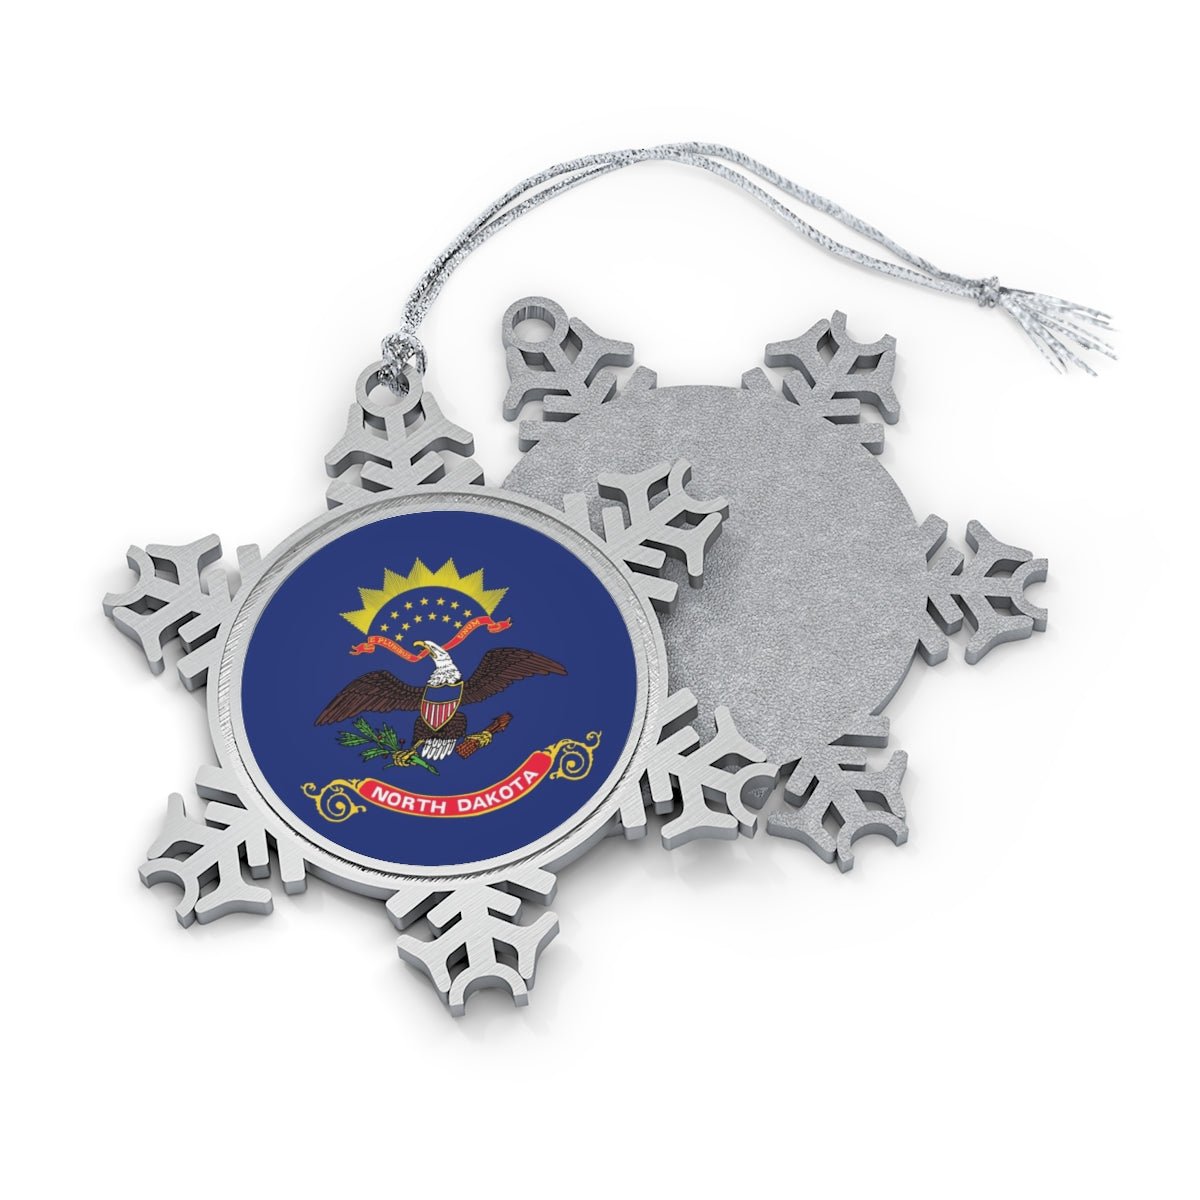 North Dakota Snowflake Ornament - Ezra's Clothing - Christmas Ornament